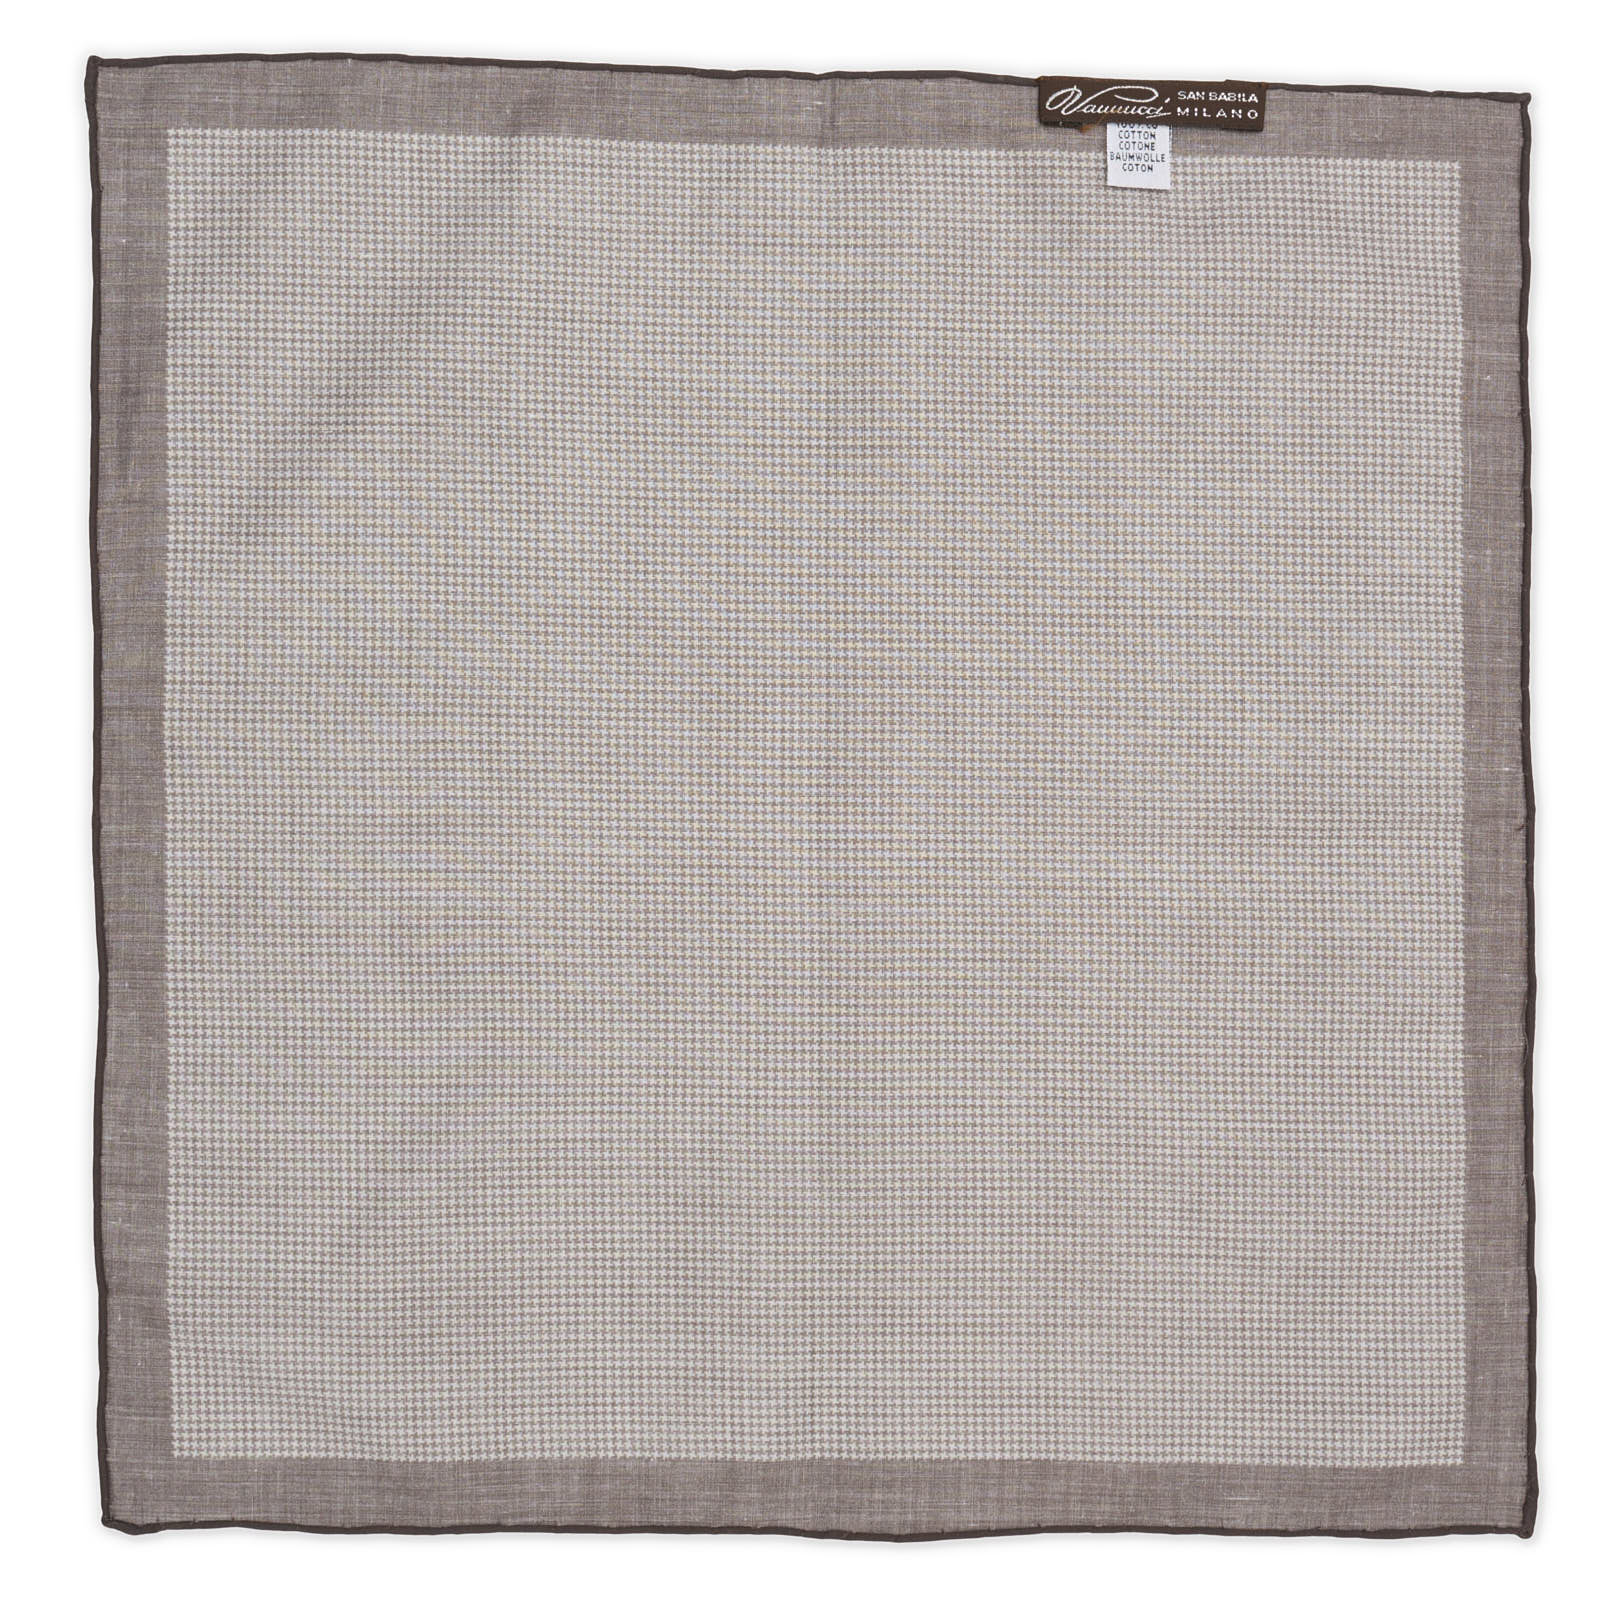 VANNUCCI Milano Handmade Gray Houndstooth Cotton Pocket Square NEW 32cm x 32cm